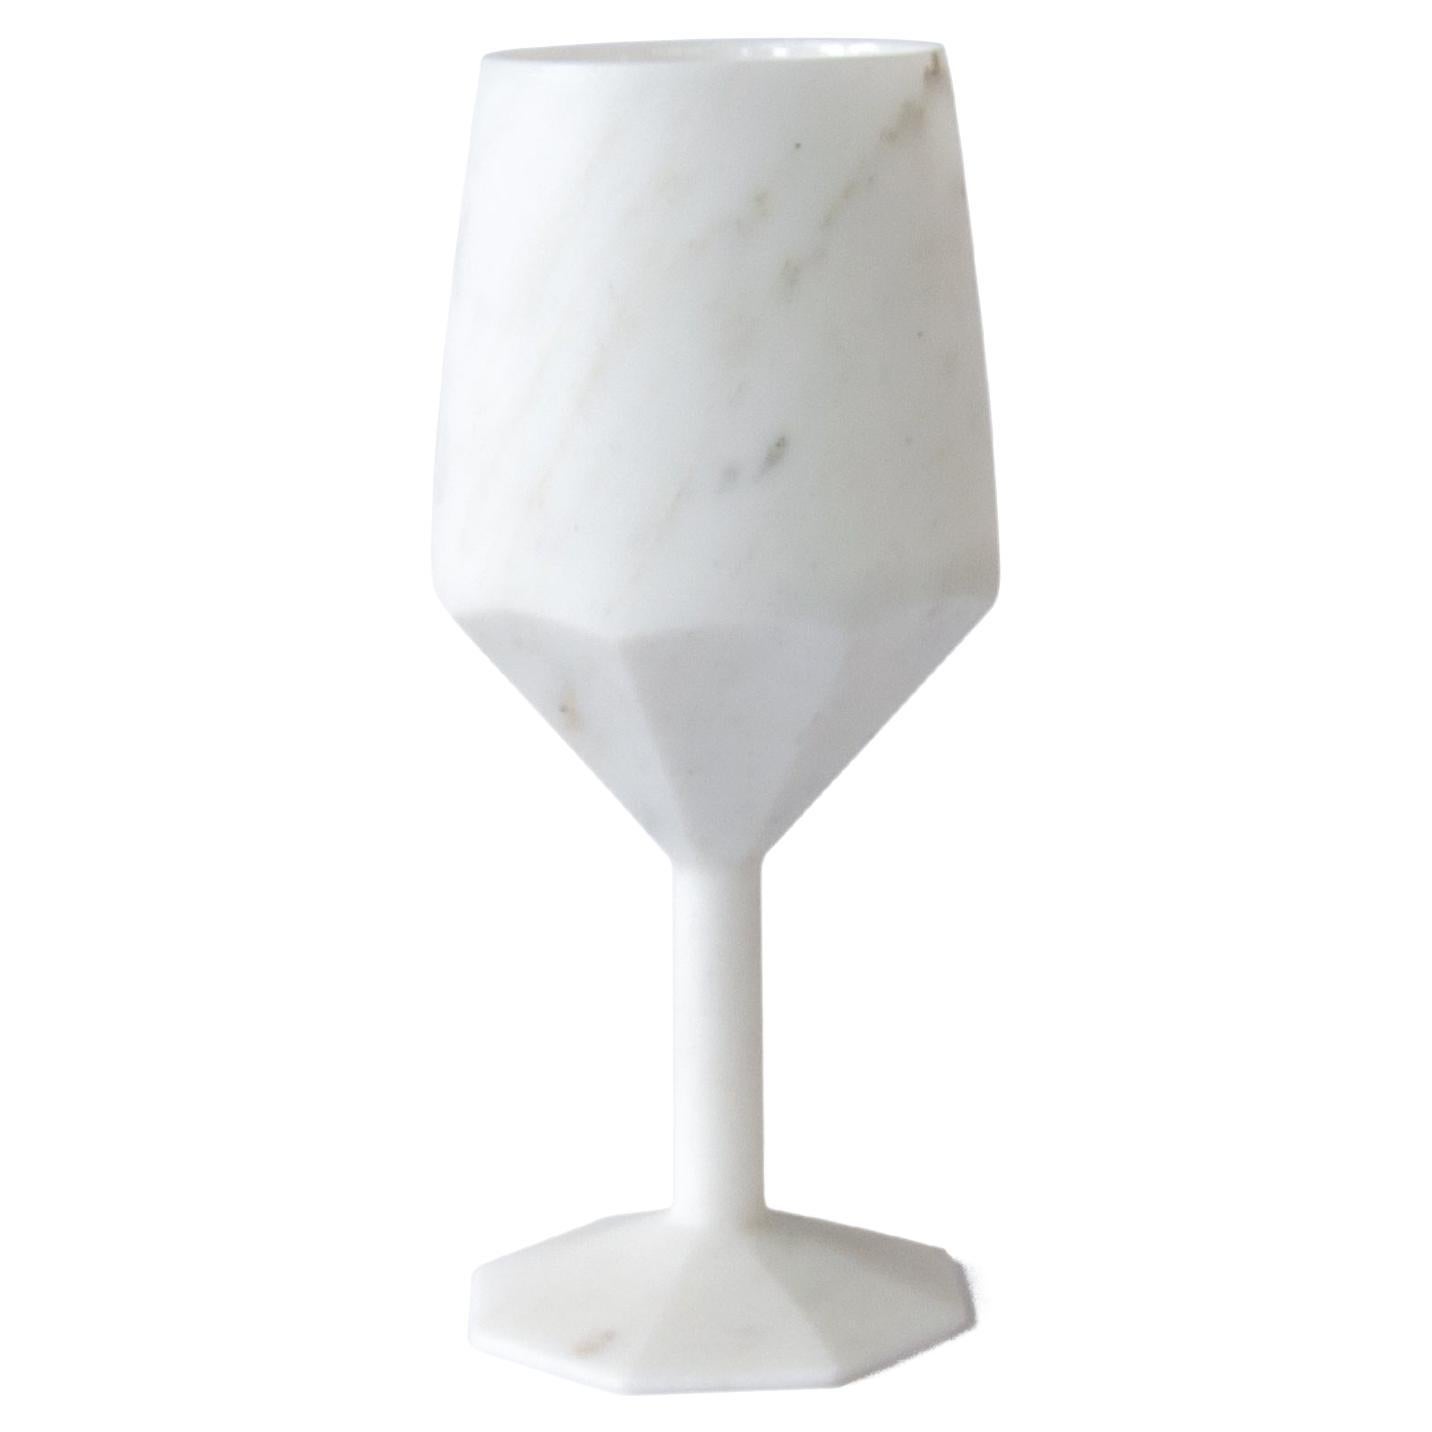 Handmade Cocktail Glass in Satin White Carrara Marble